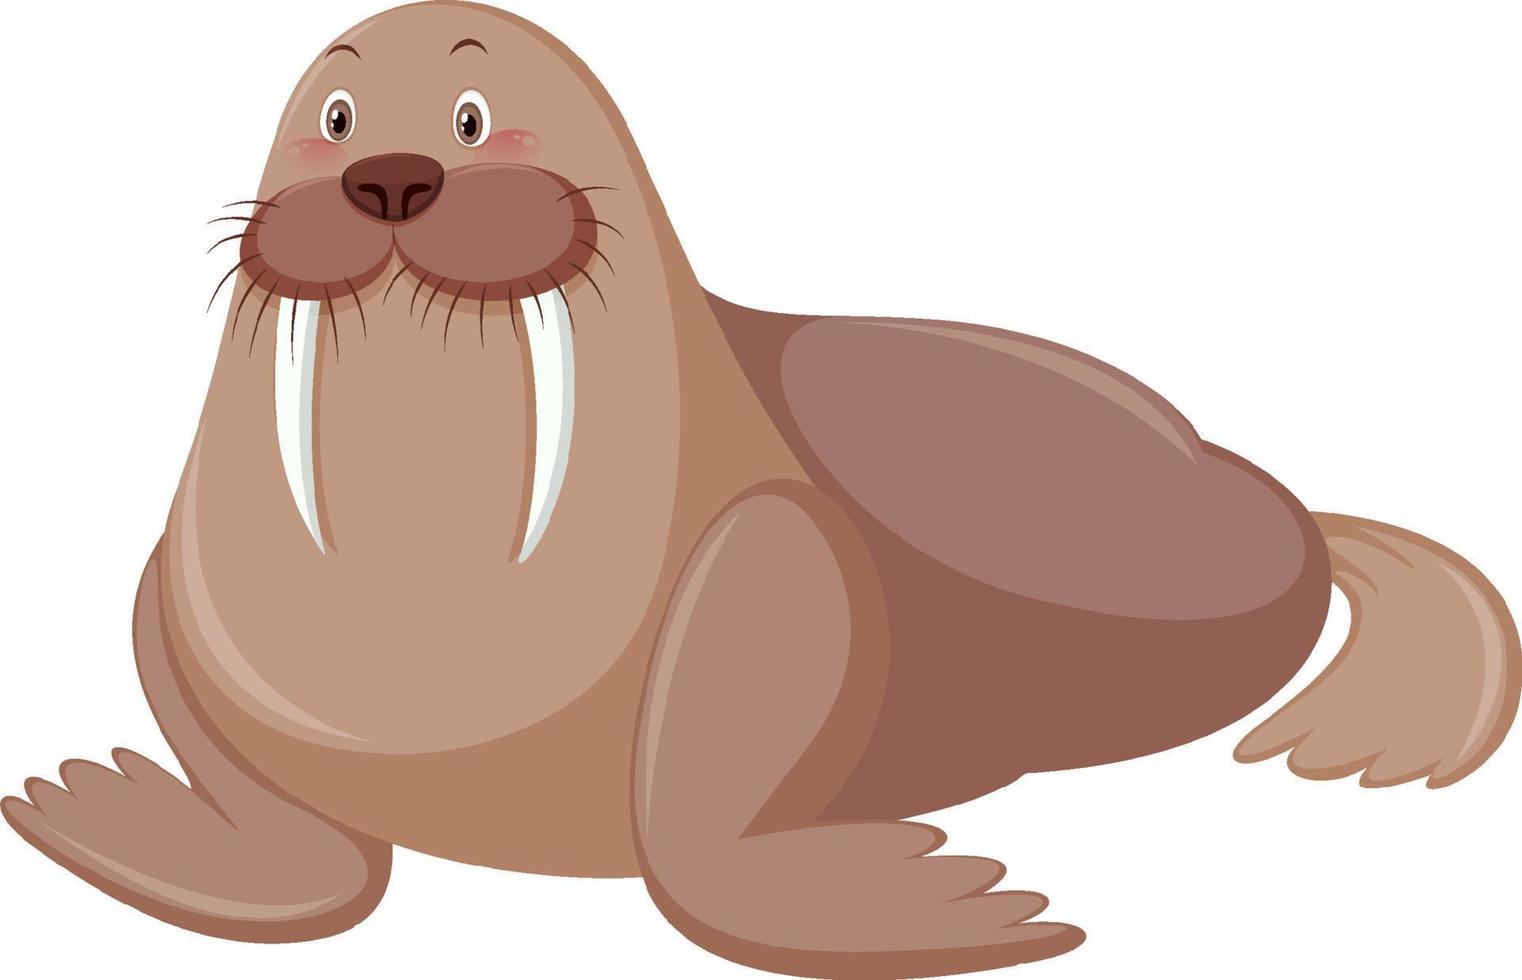 A brown walrus in cartoon style vector